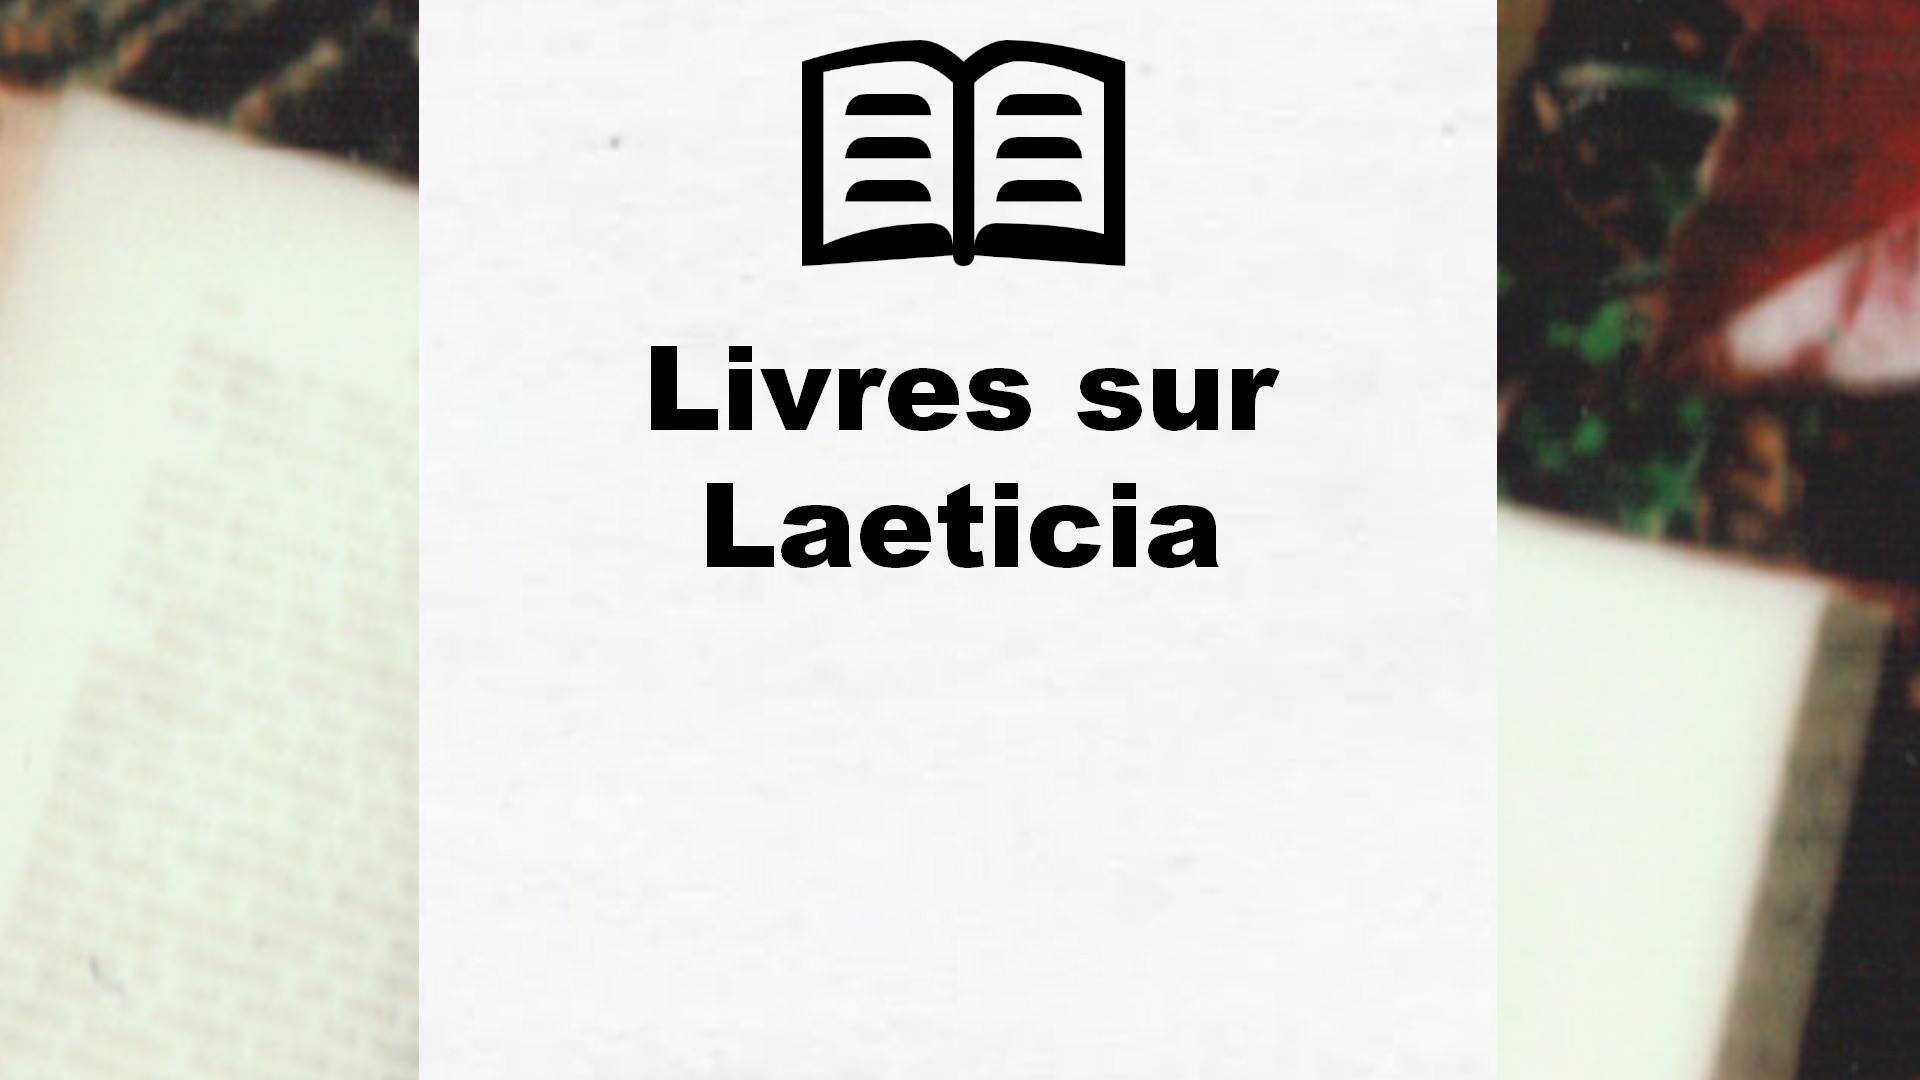 Livres sur Laeticia